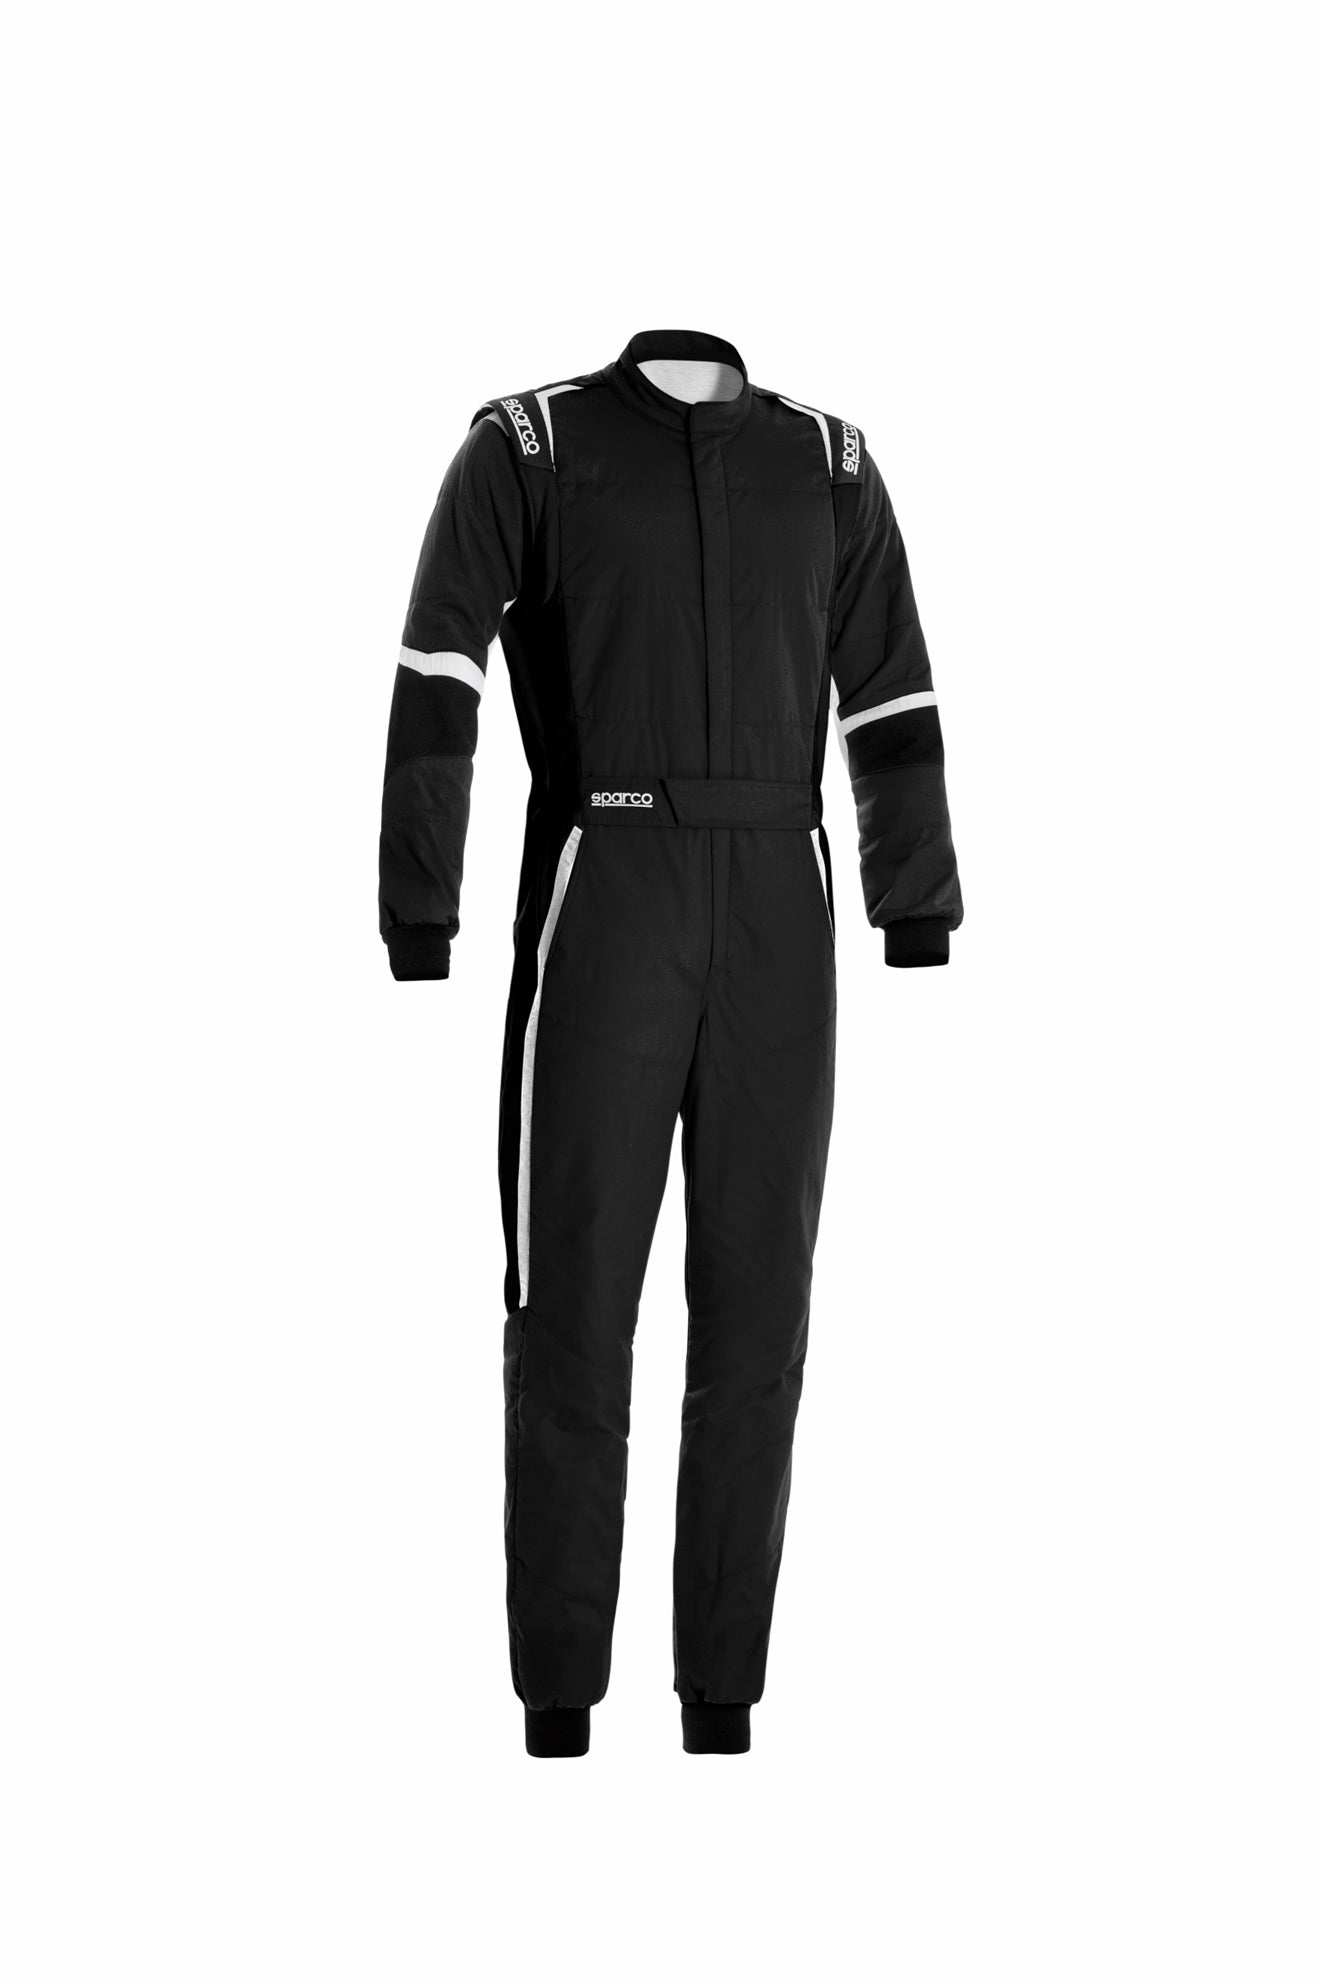 Sparco X-Light (2020) Racing Suit